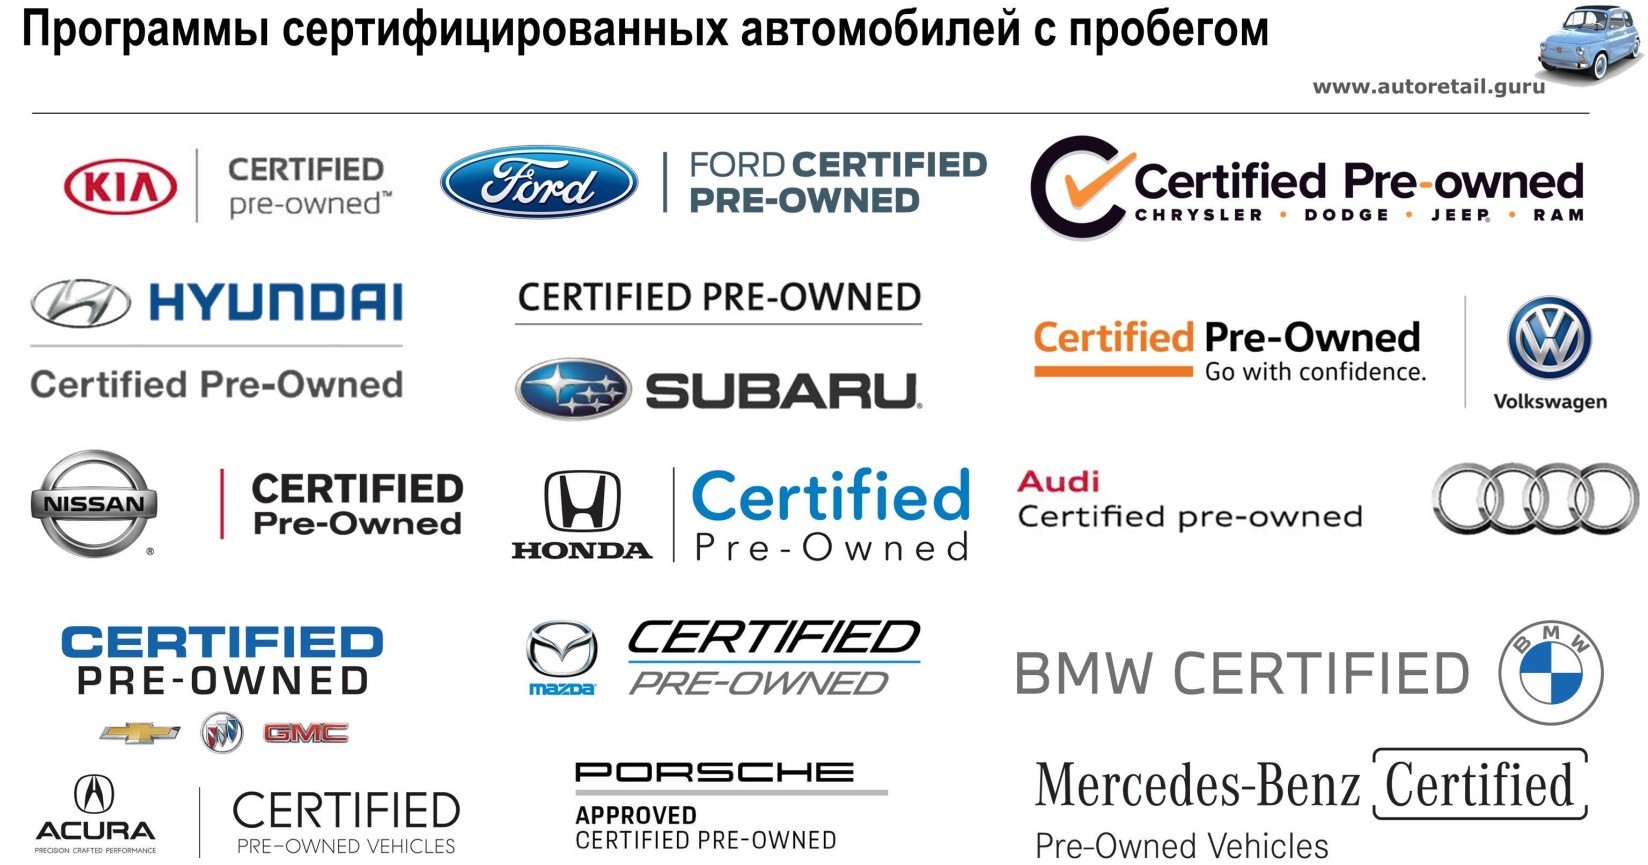 Program Honda Certified Used Vehicle (CPO).